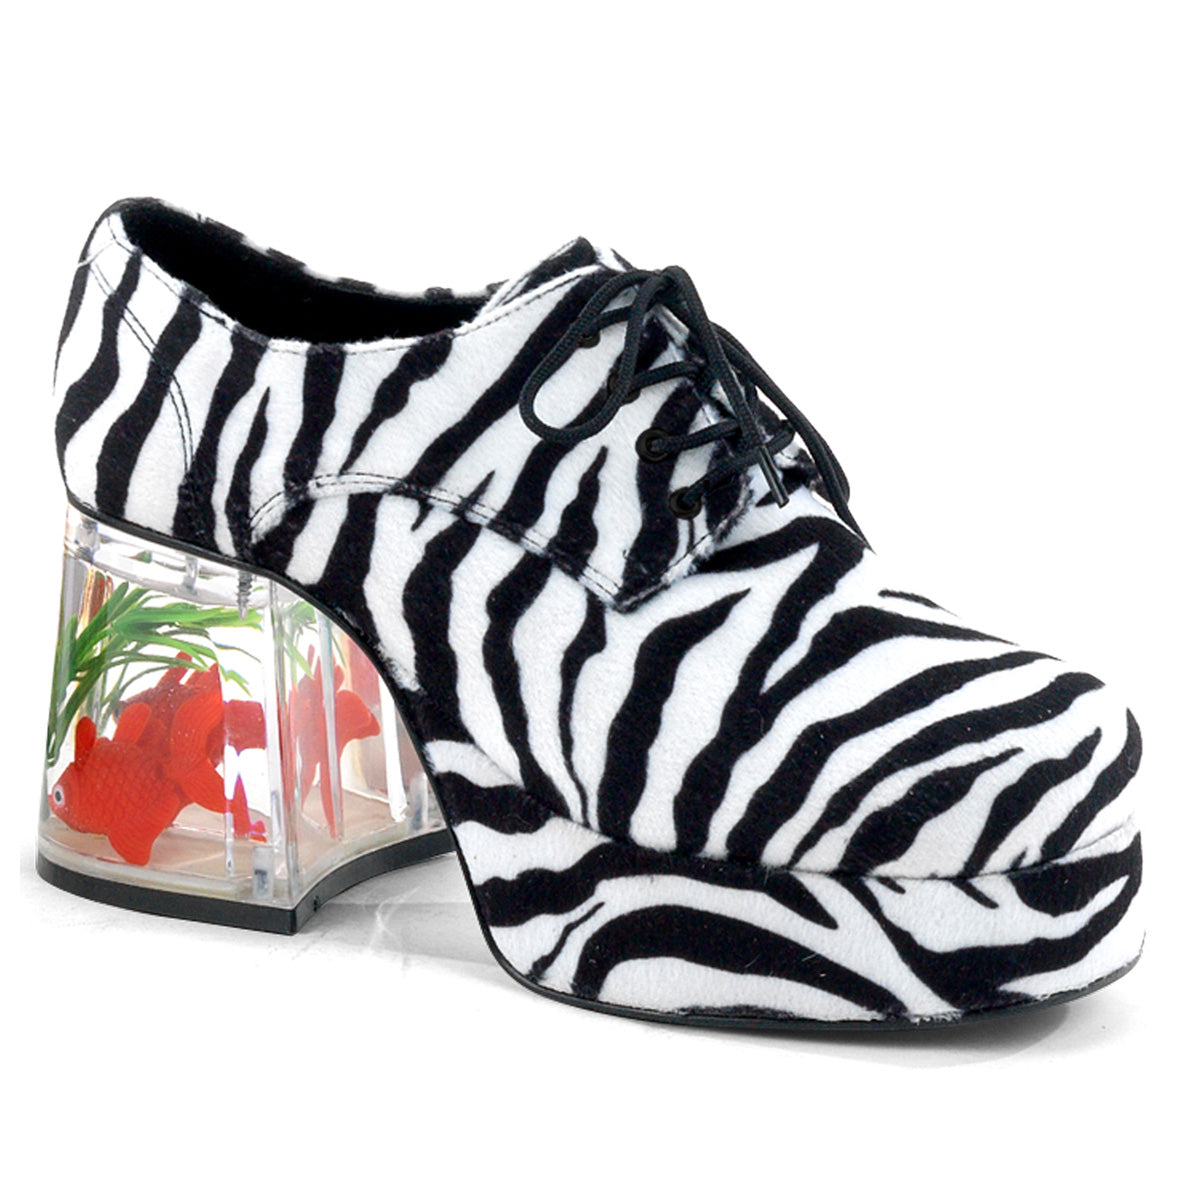 PIMP-02 Fancy Dress Costume Funtasma Men's Shoes Zebra Fur